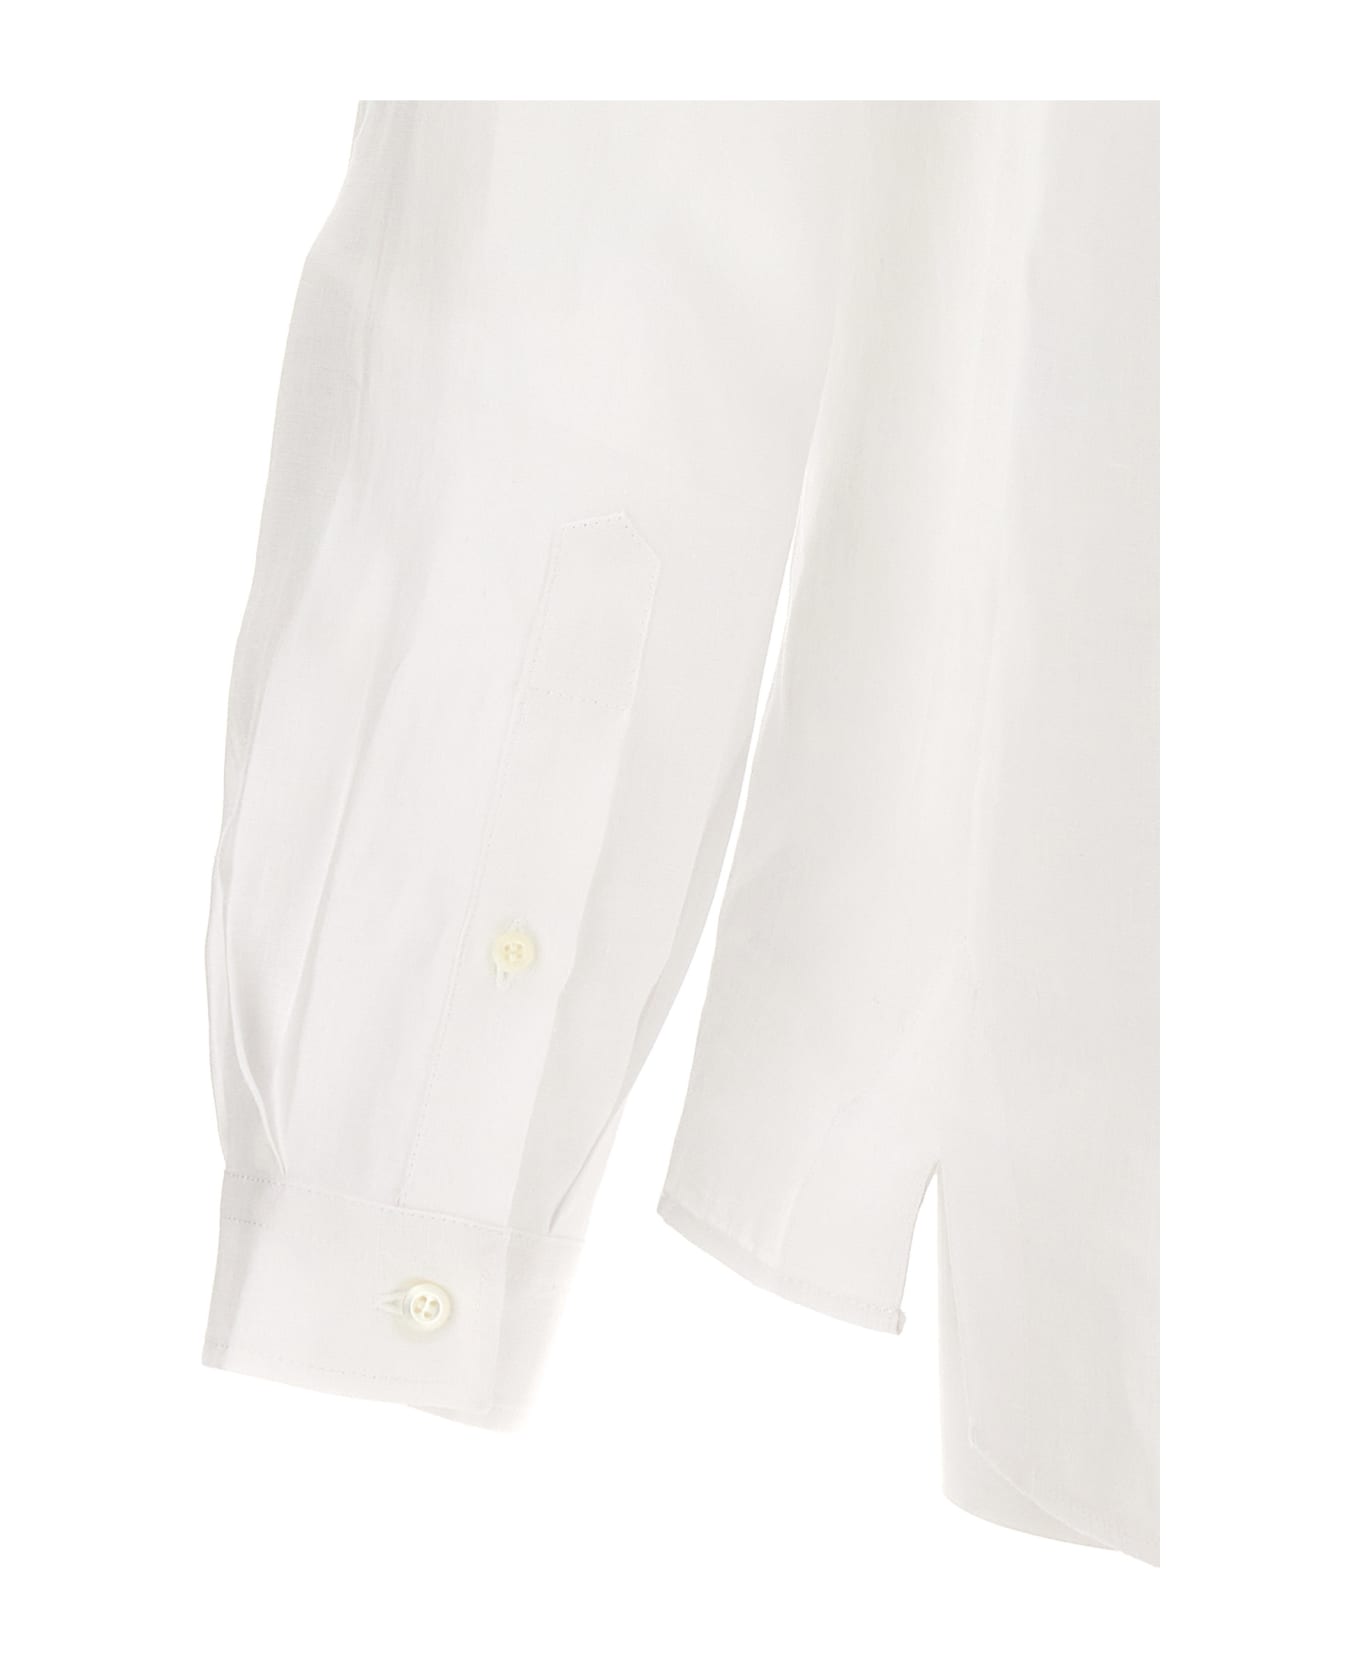 Brunello Cucinelli Korean Hemp Shirt - White シャツ